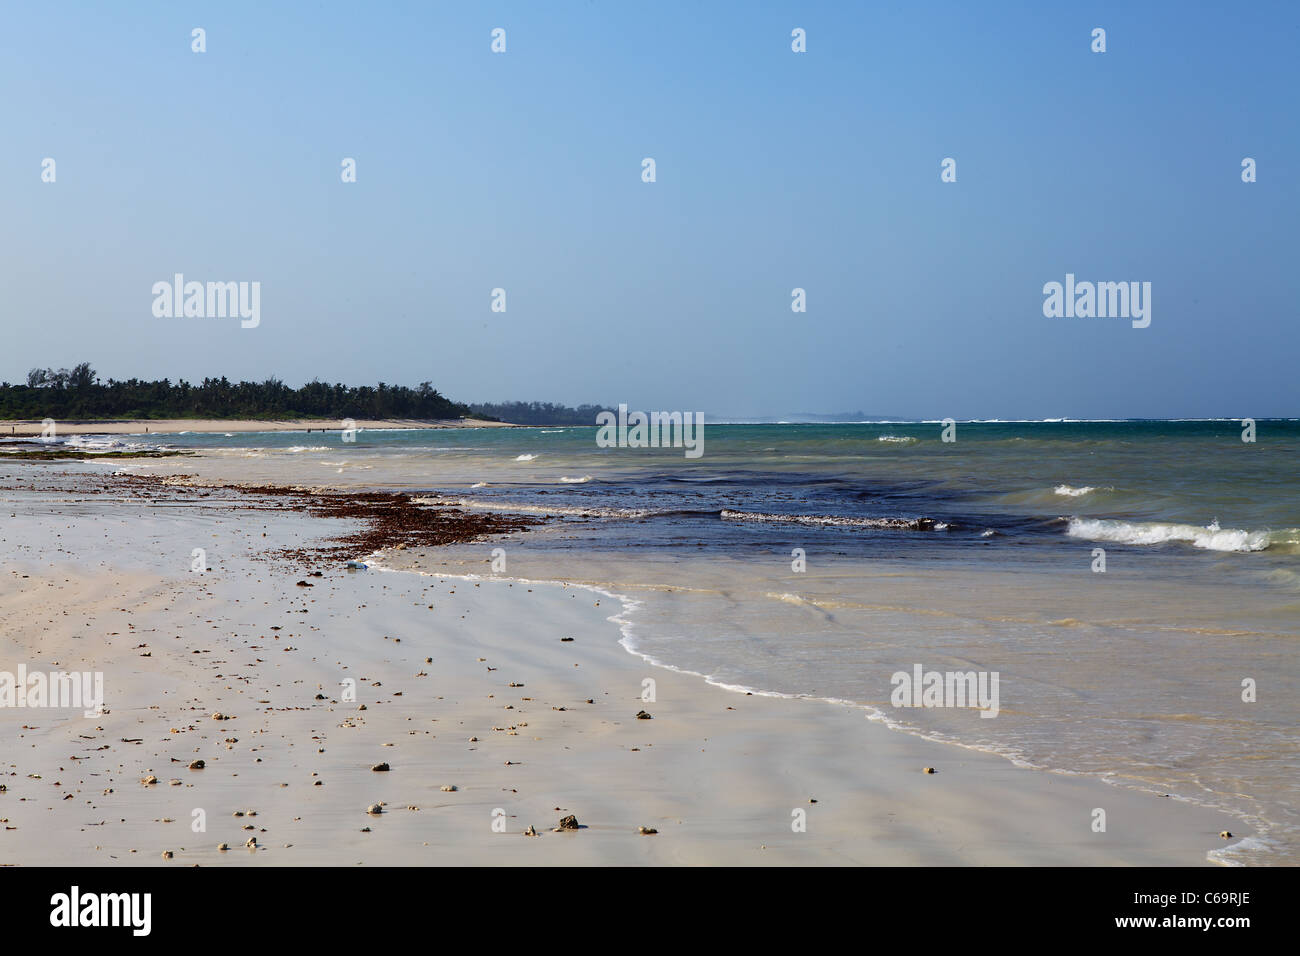 Empty Dania beach in Kenya on the Indian ocean Stock Photo